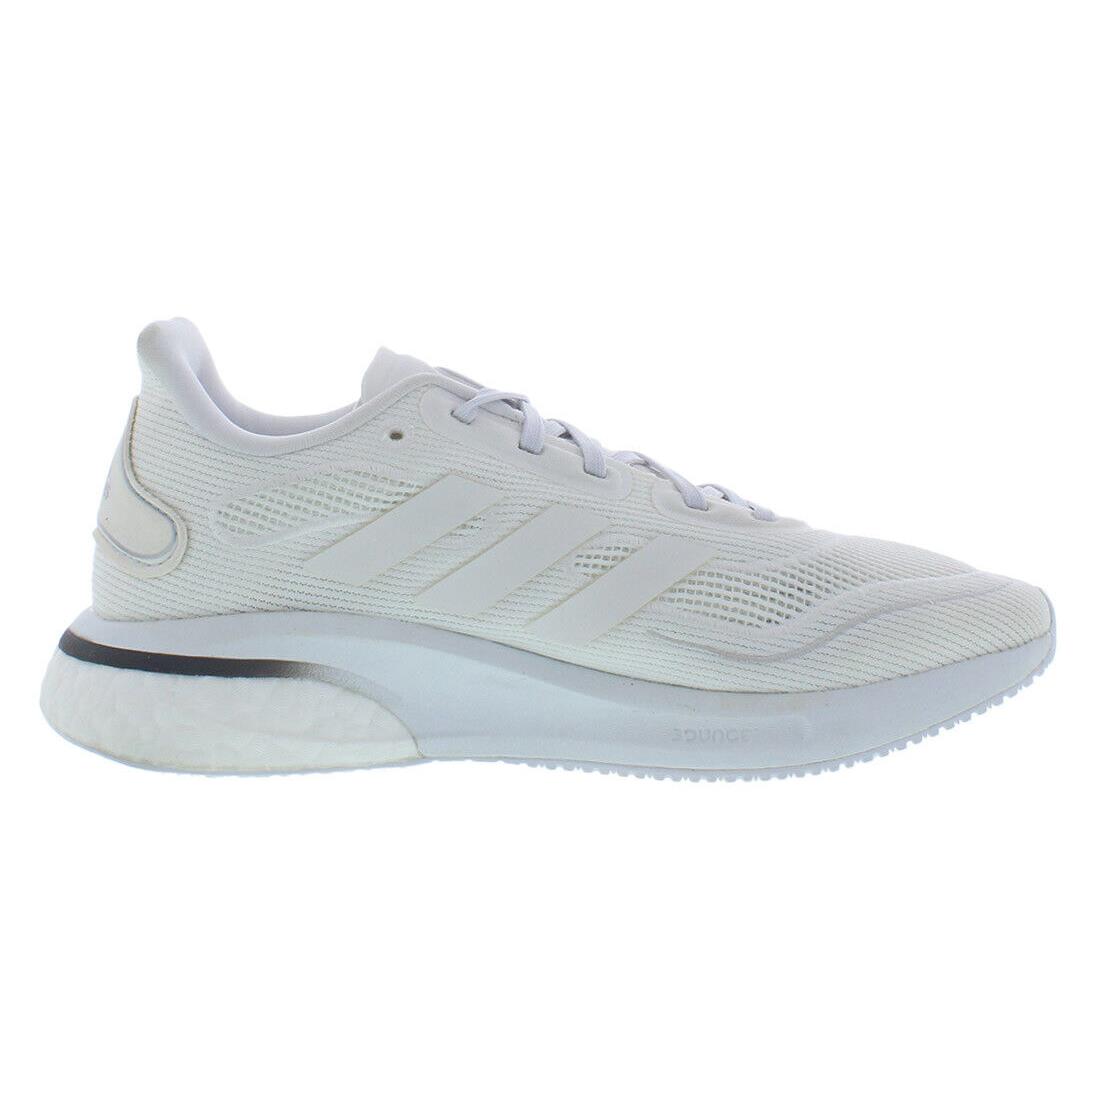 Adidas Supernova W Womens Shoes Size 5 Color: White/white/silver Metallic - White/White/Silver Metallic, Full: White/White/Silver Metallic